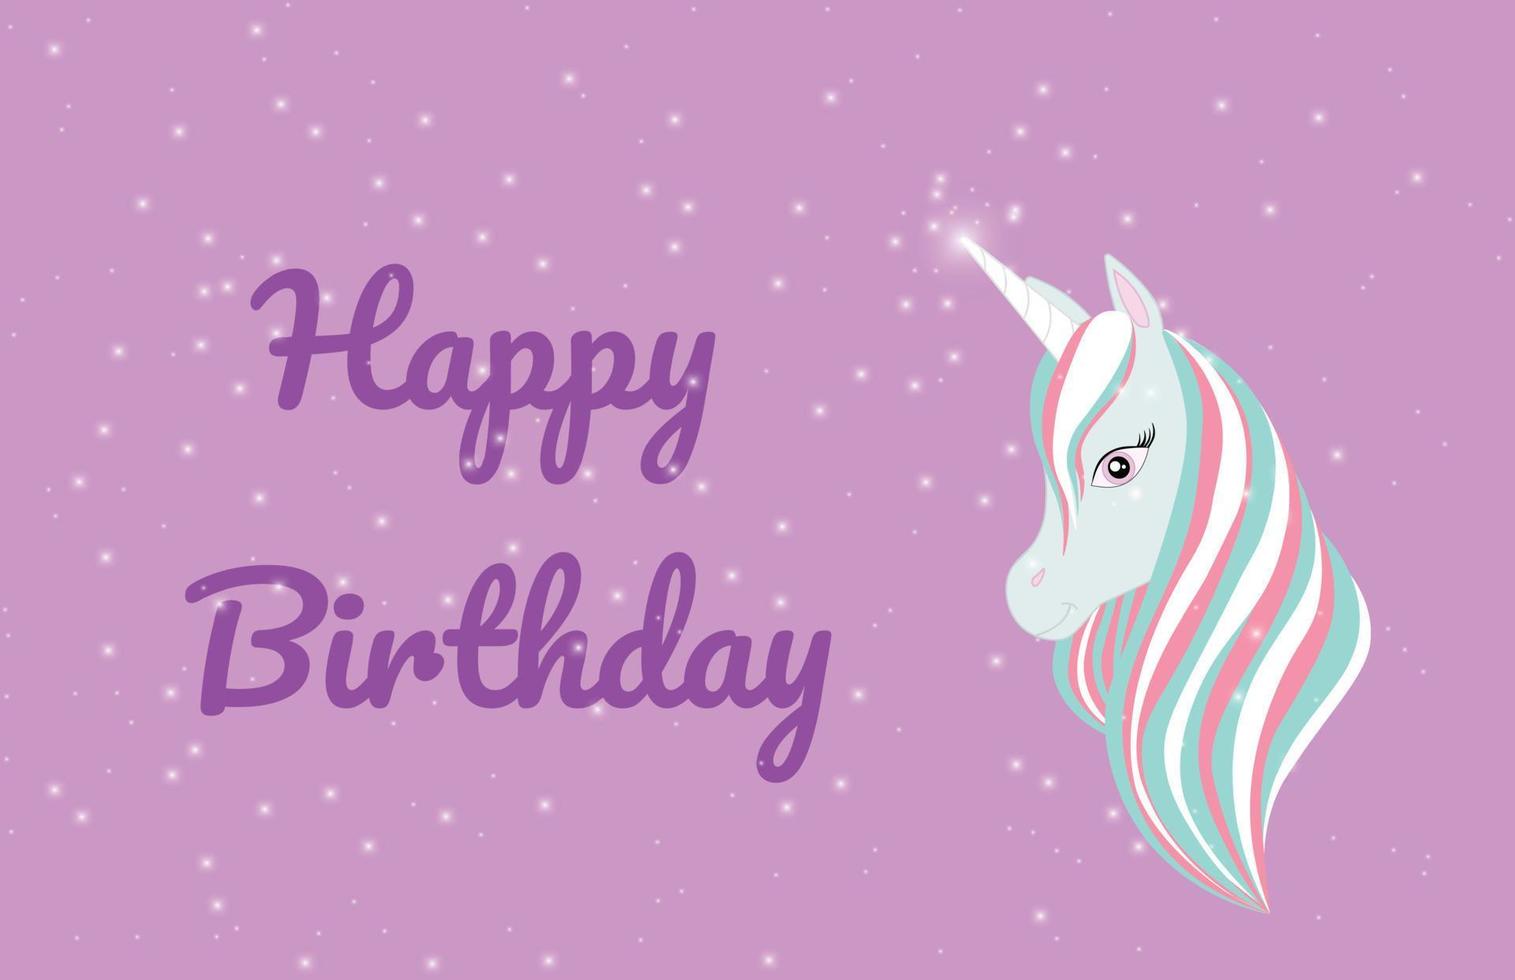 Happy birthday card with blue unicorn vector